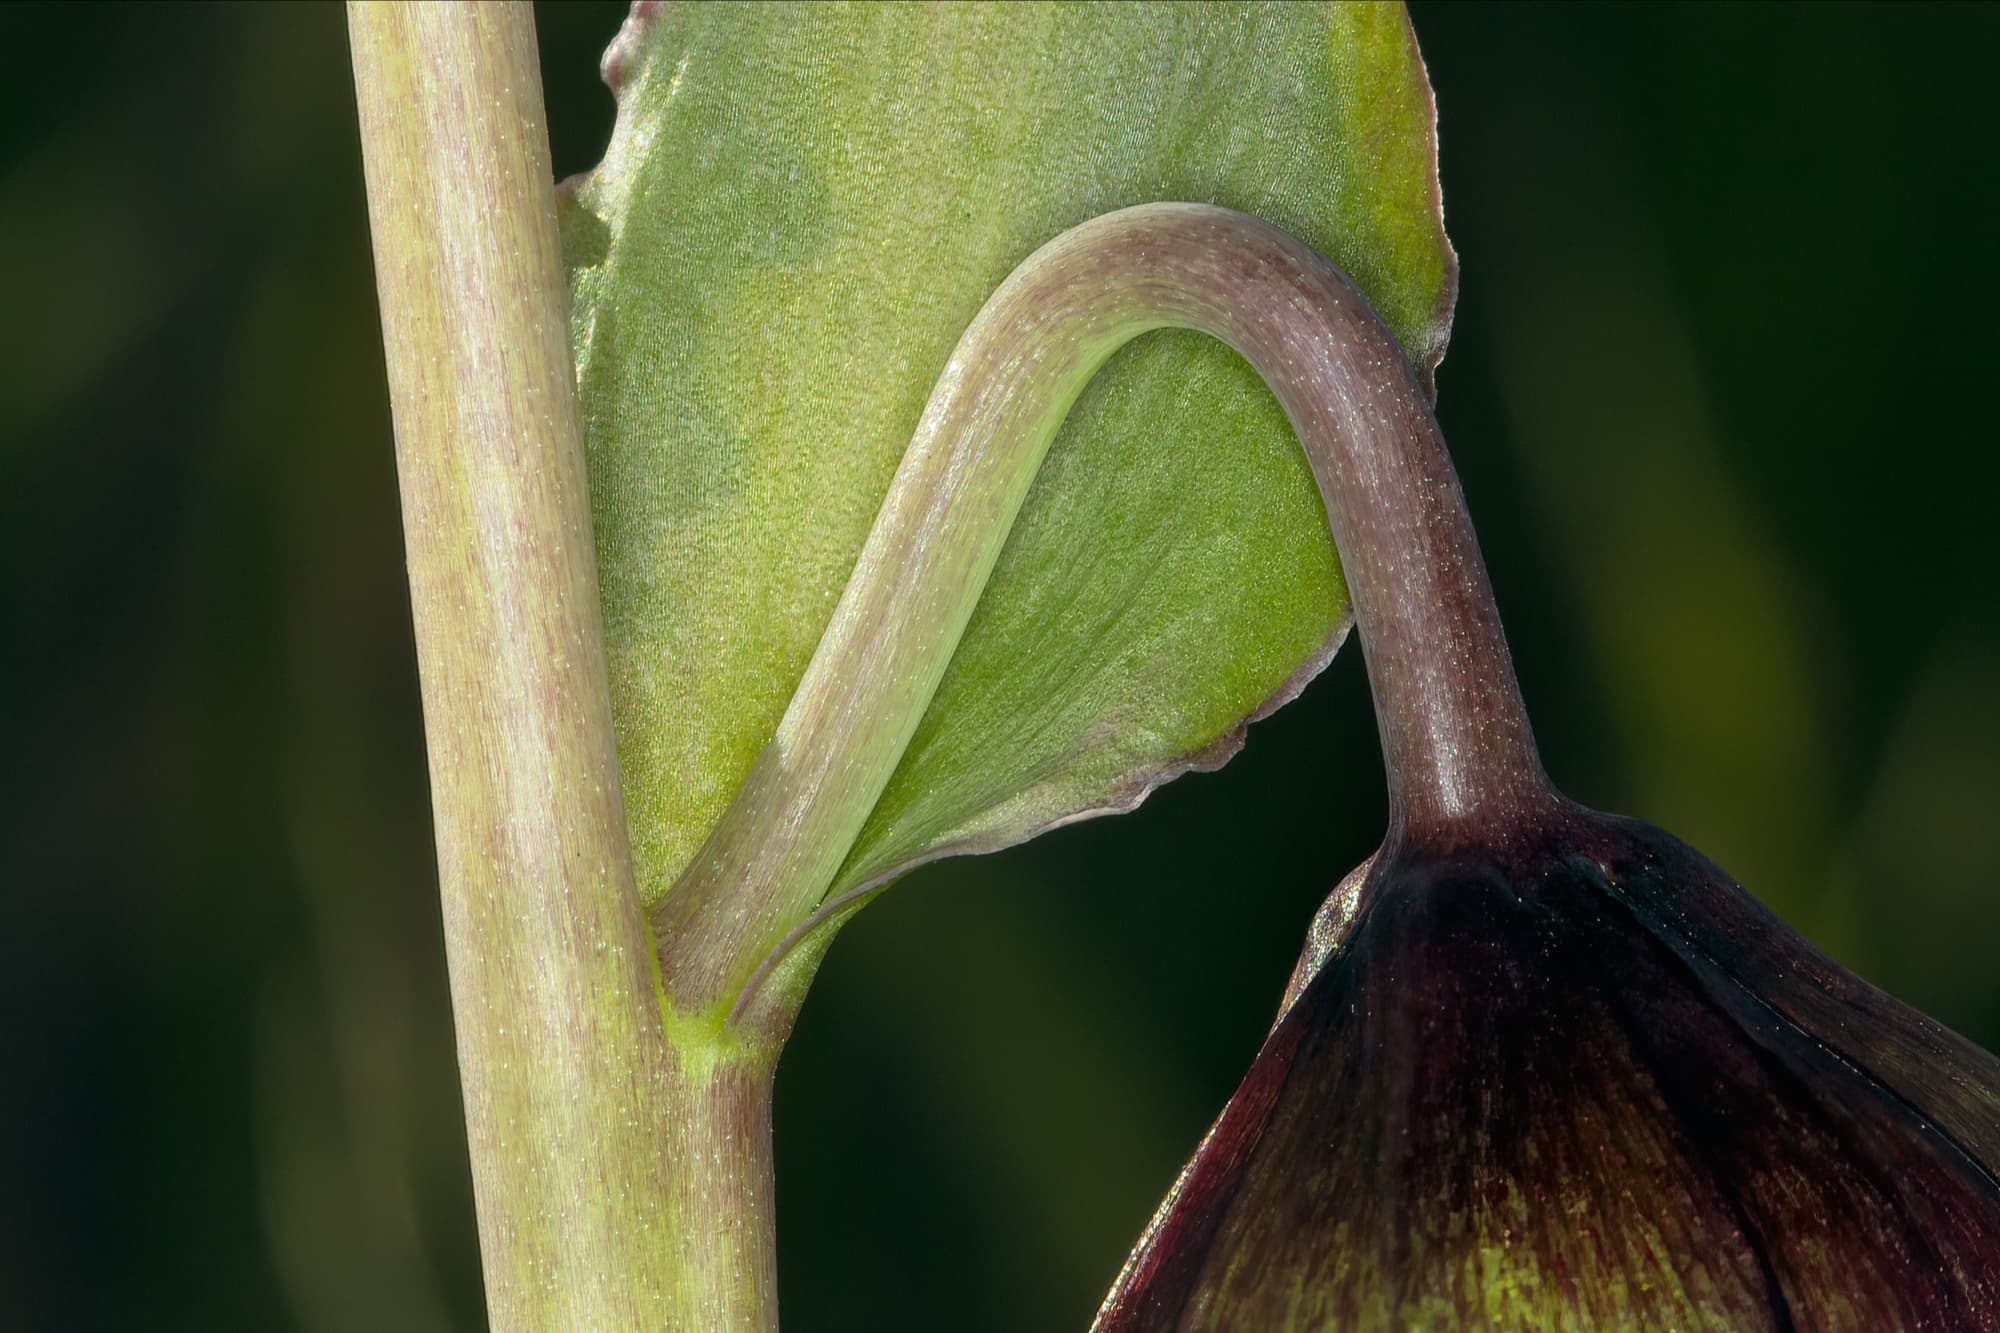  Chocolate Lily - <em>Fritillaria biflora</em>